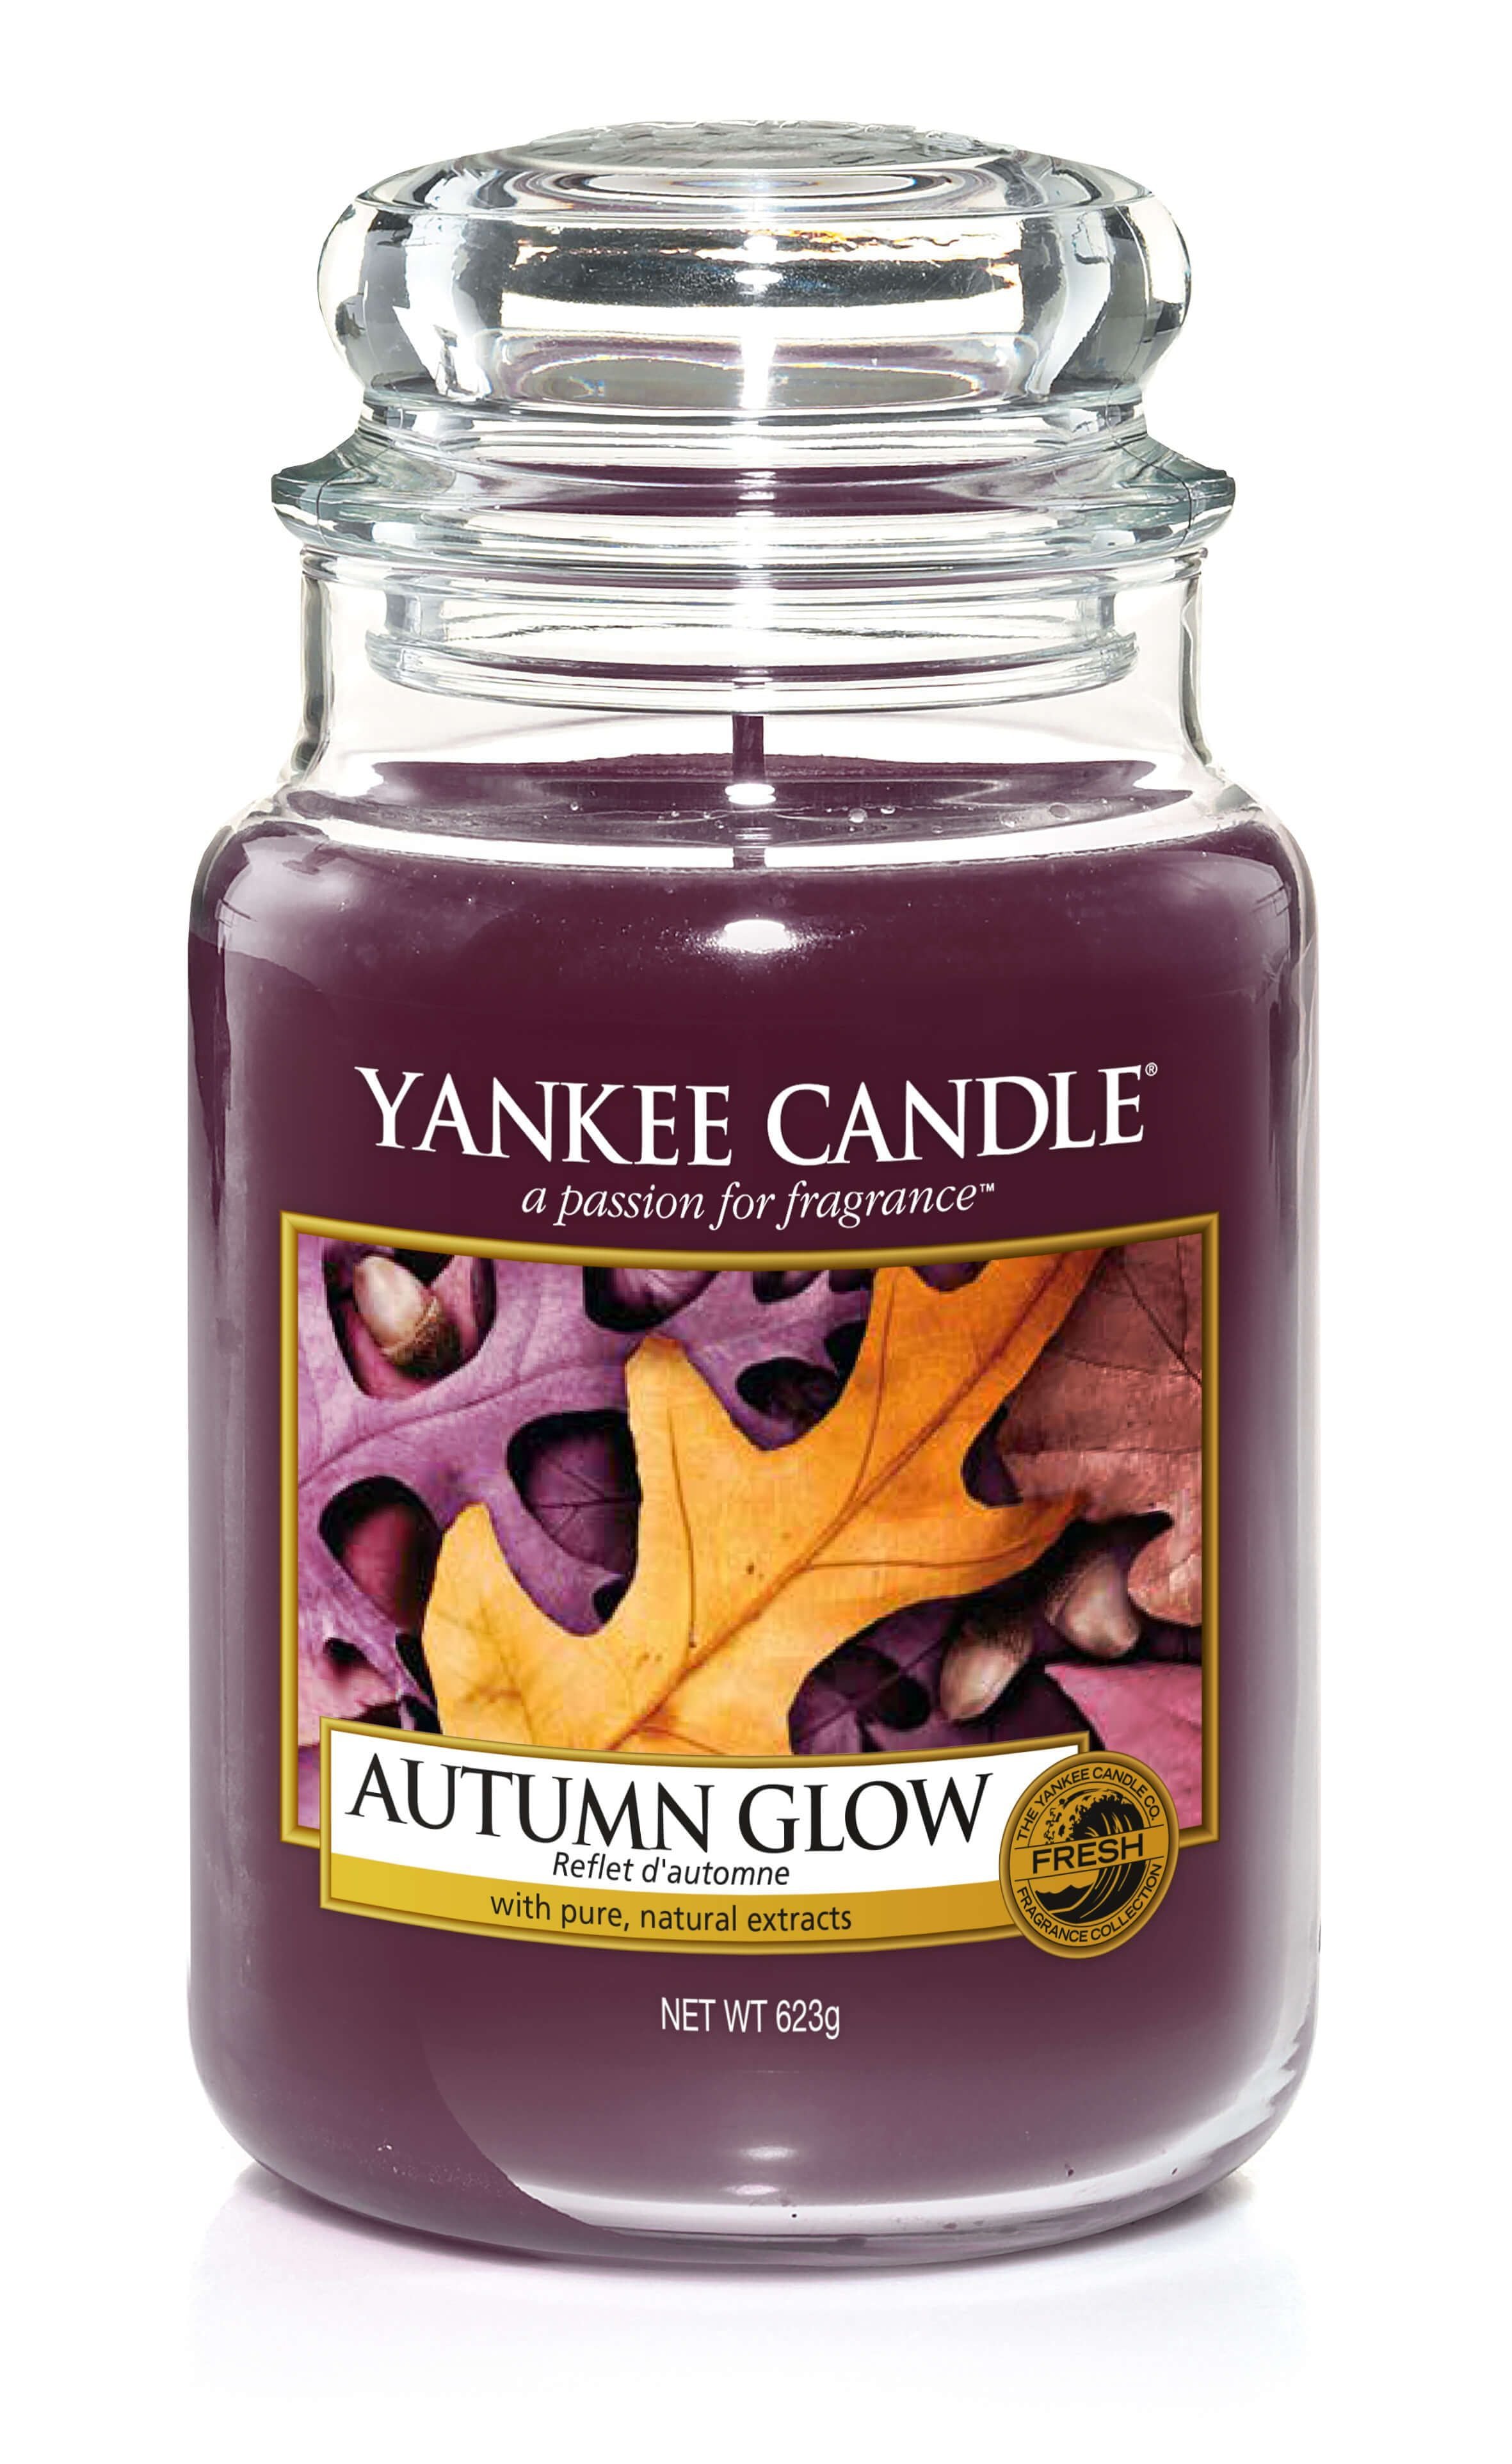 Reflet d'automne - Jarre Yankee Candle 